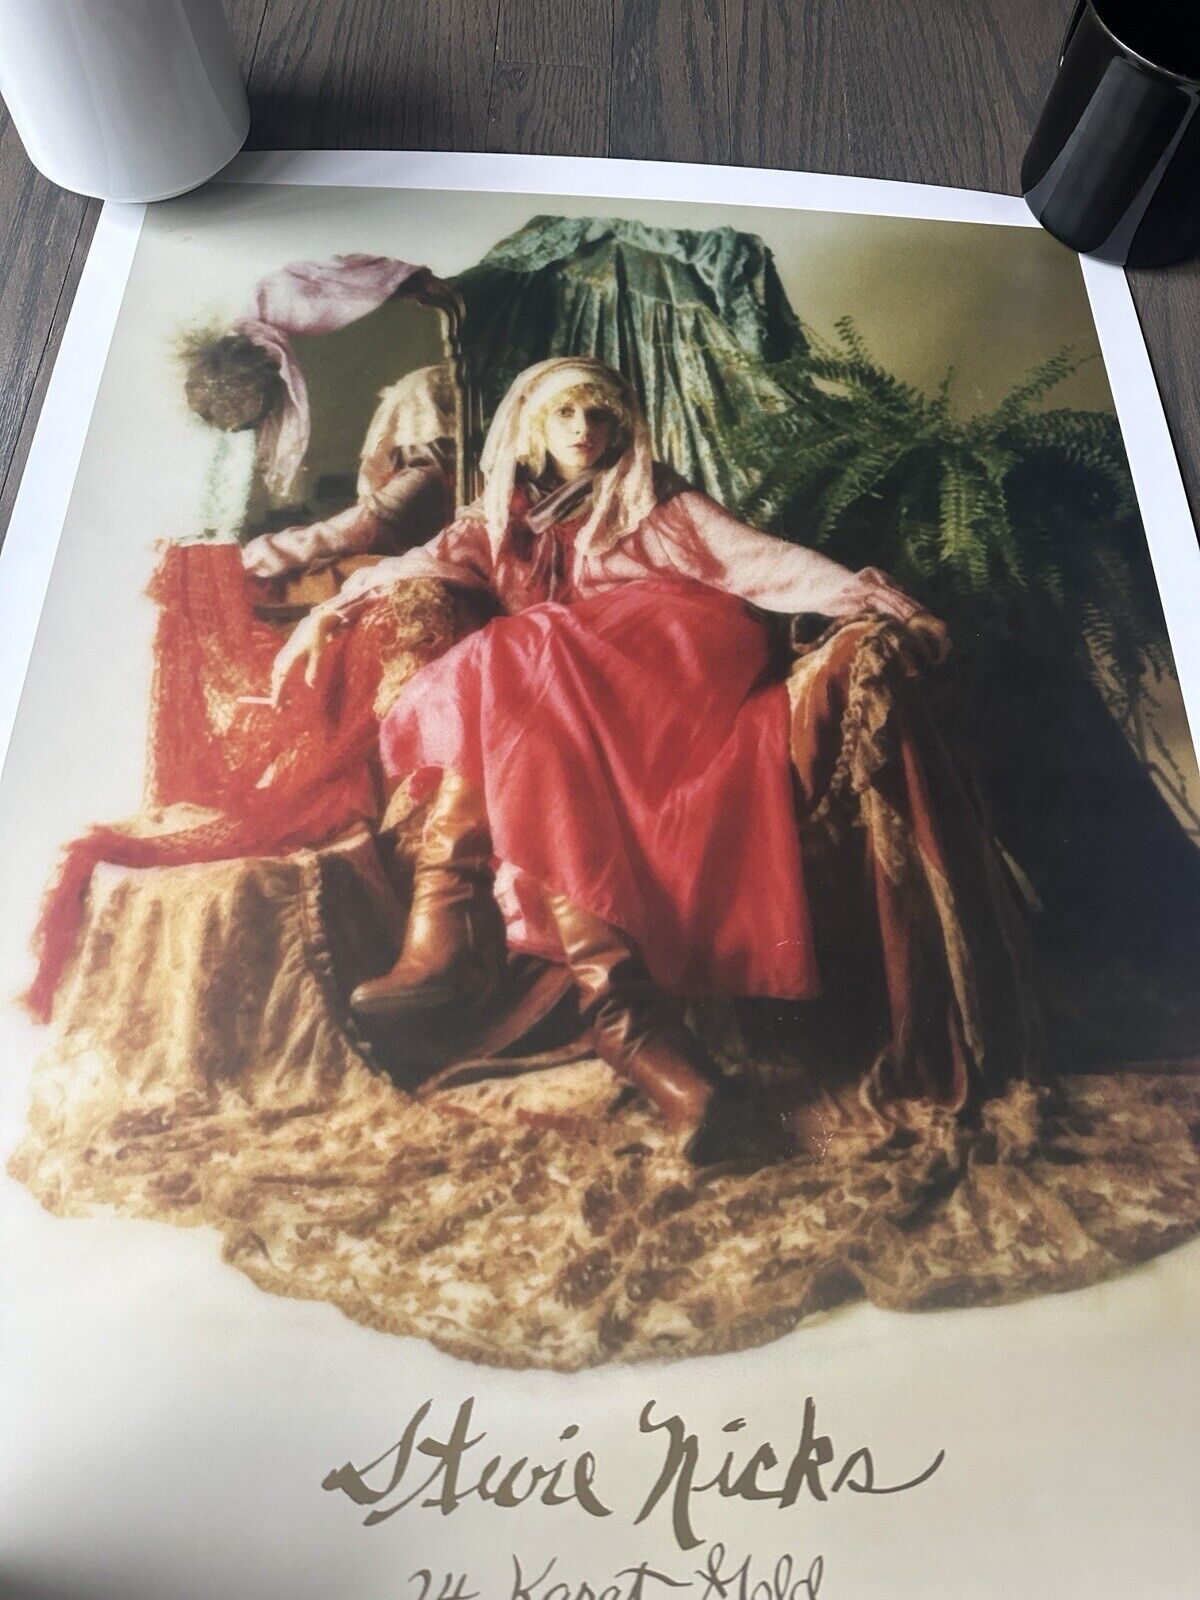 Stevie Nicks  24 karat Gold Rare Limited Edition Poster 359/2000